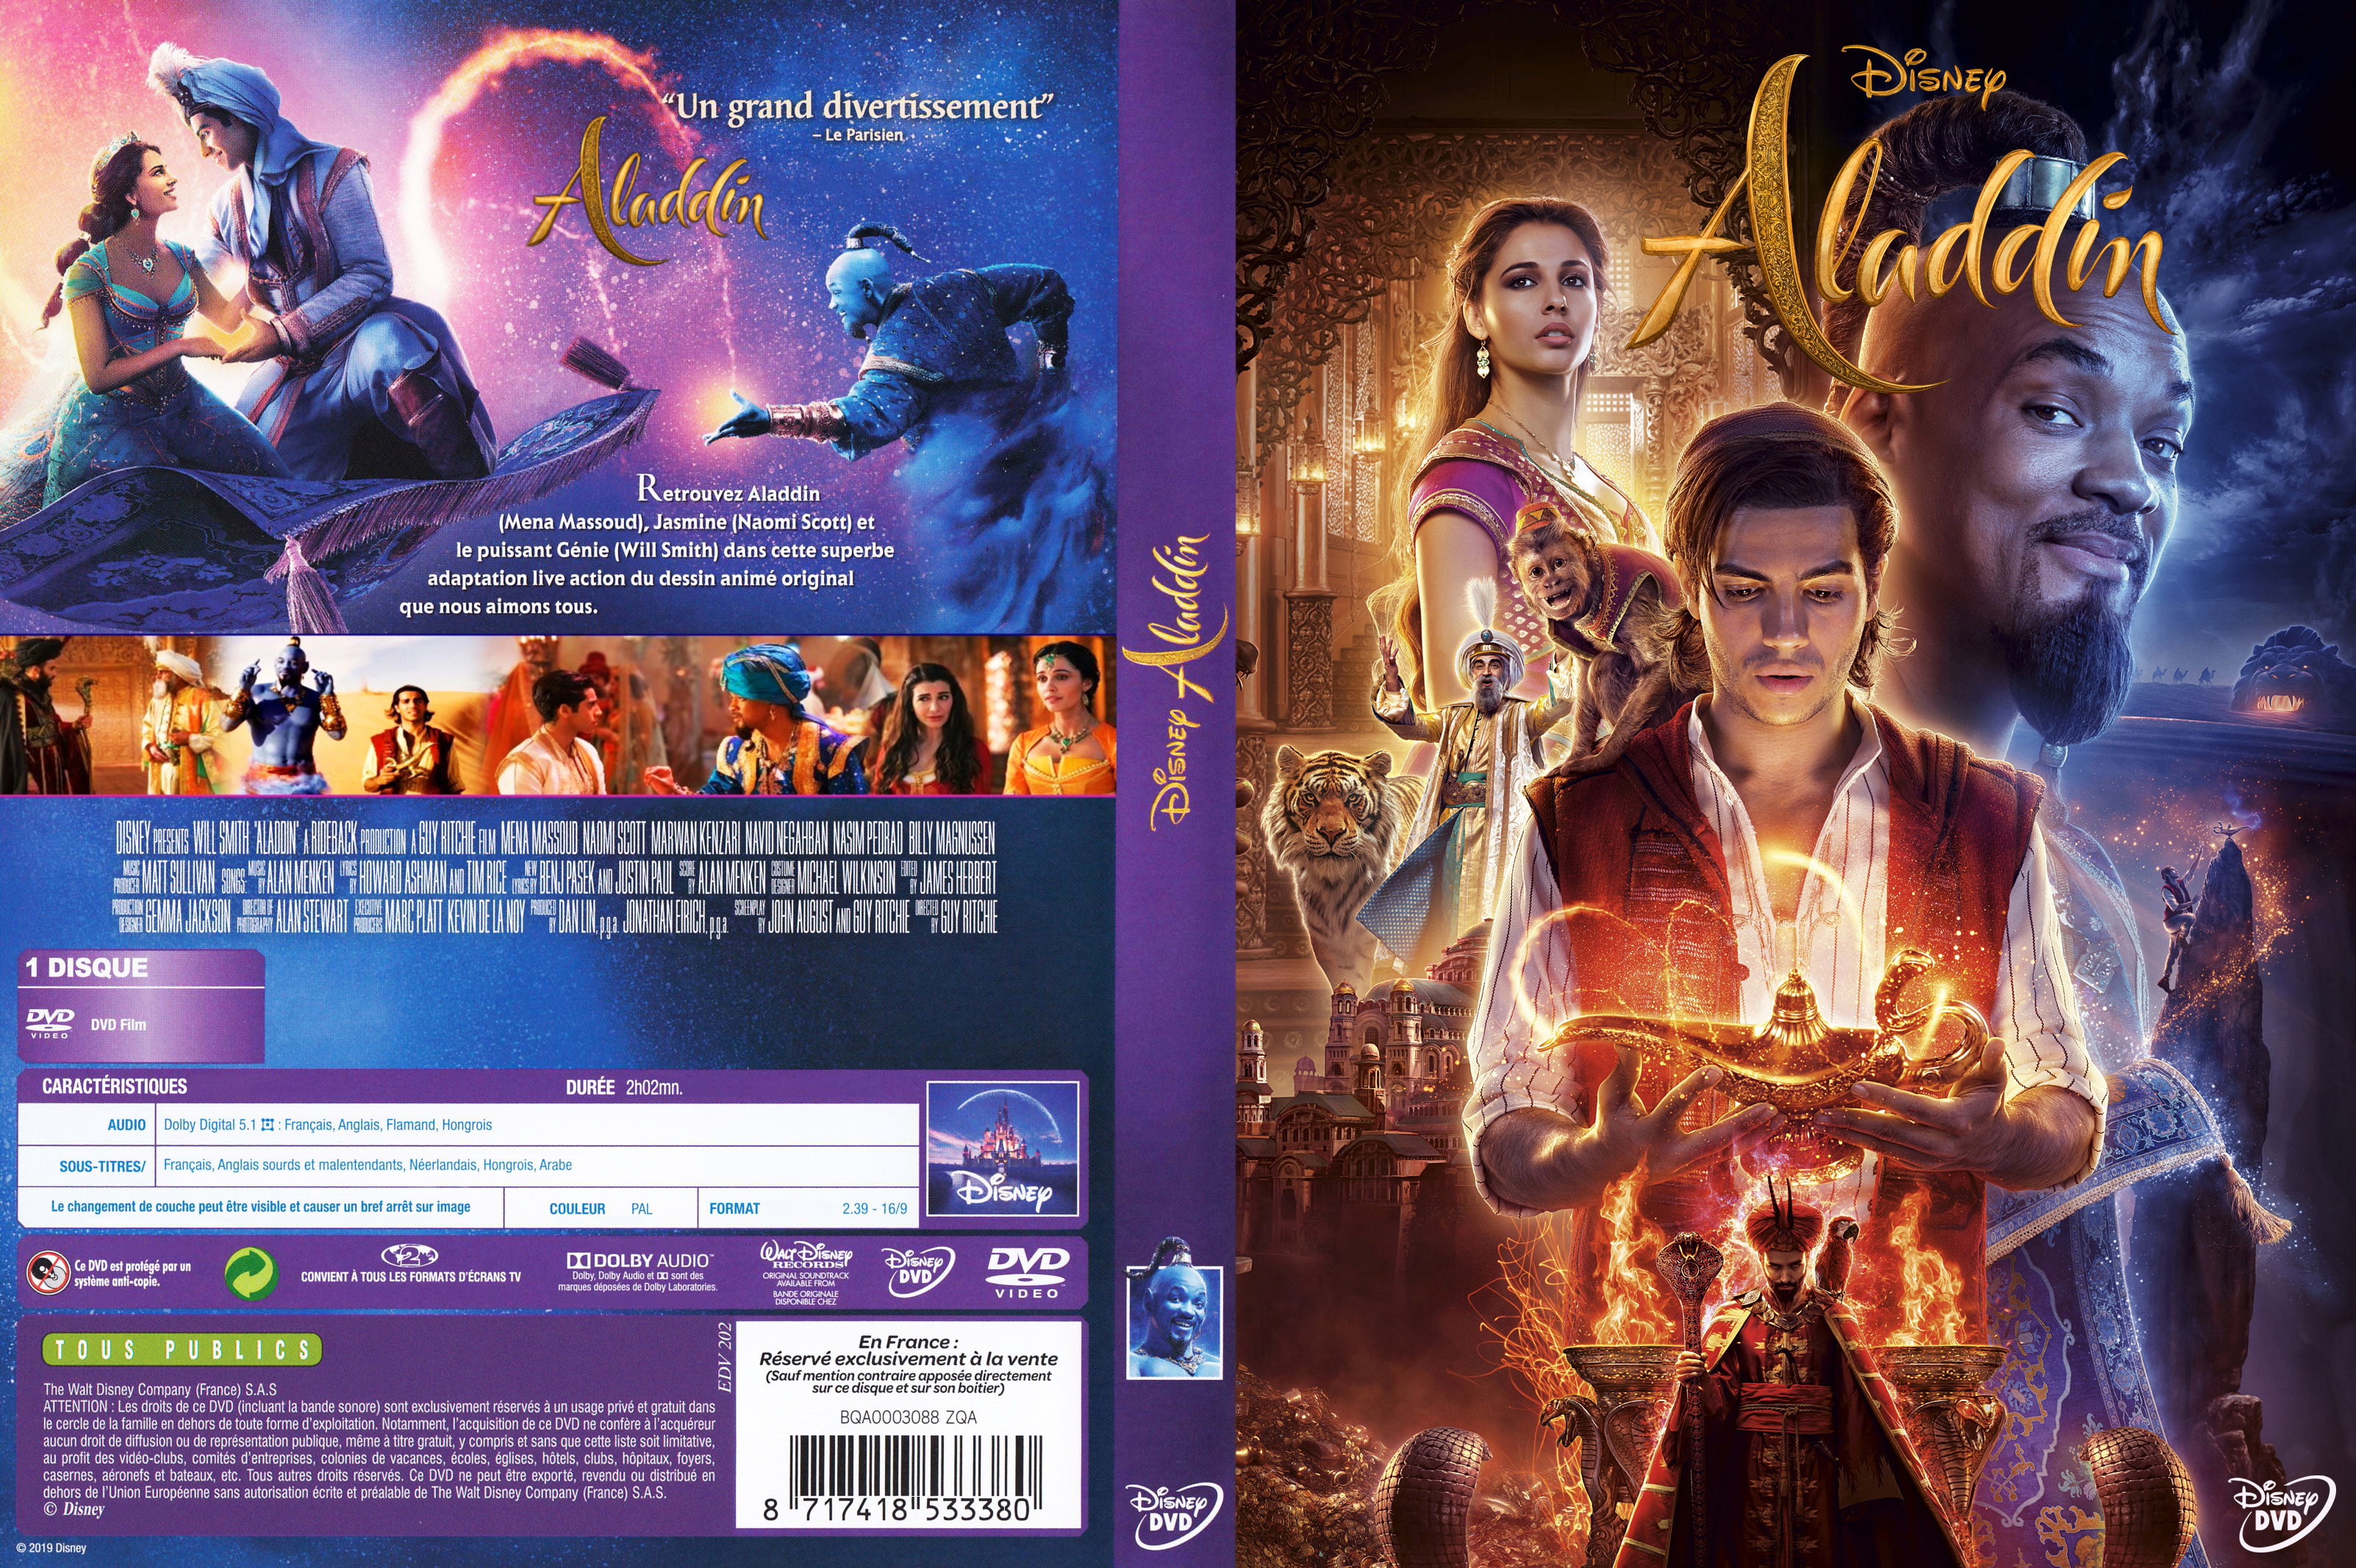 Jaquette DVD Aladdin 2019 custom